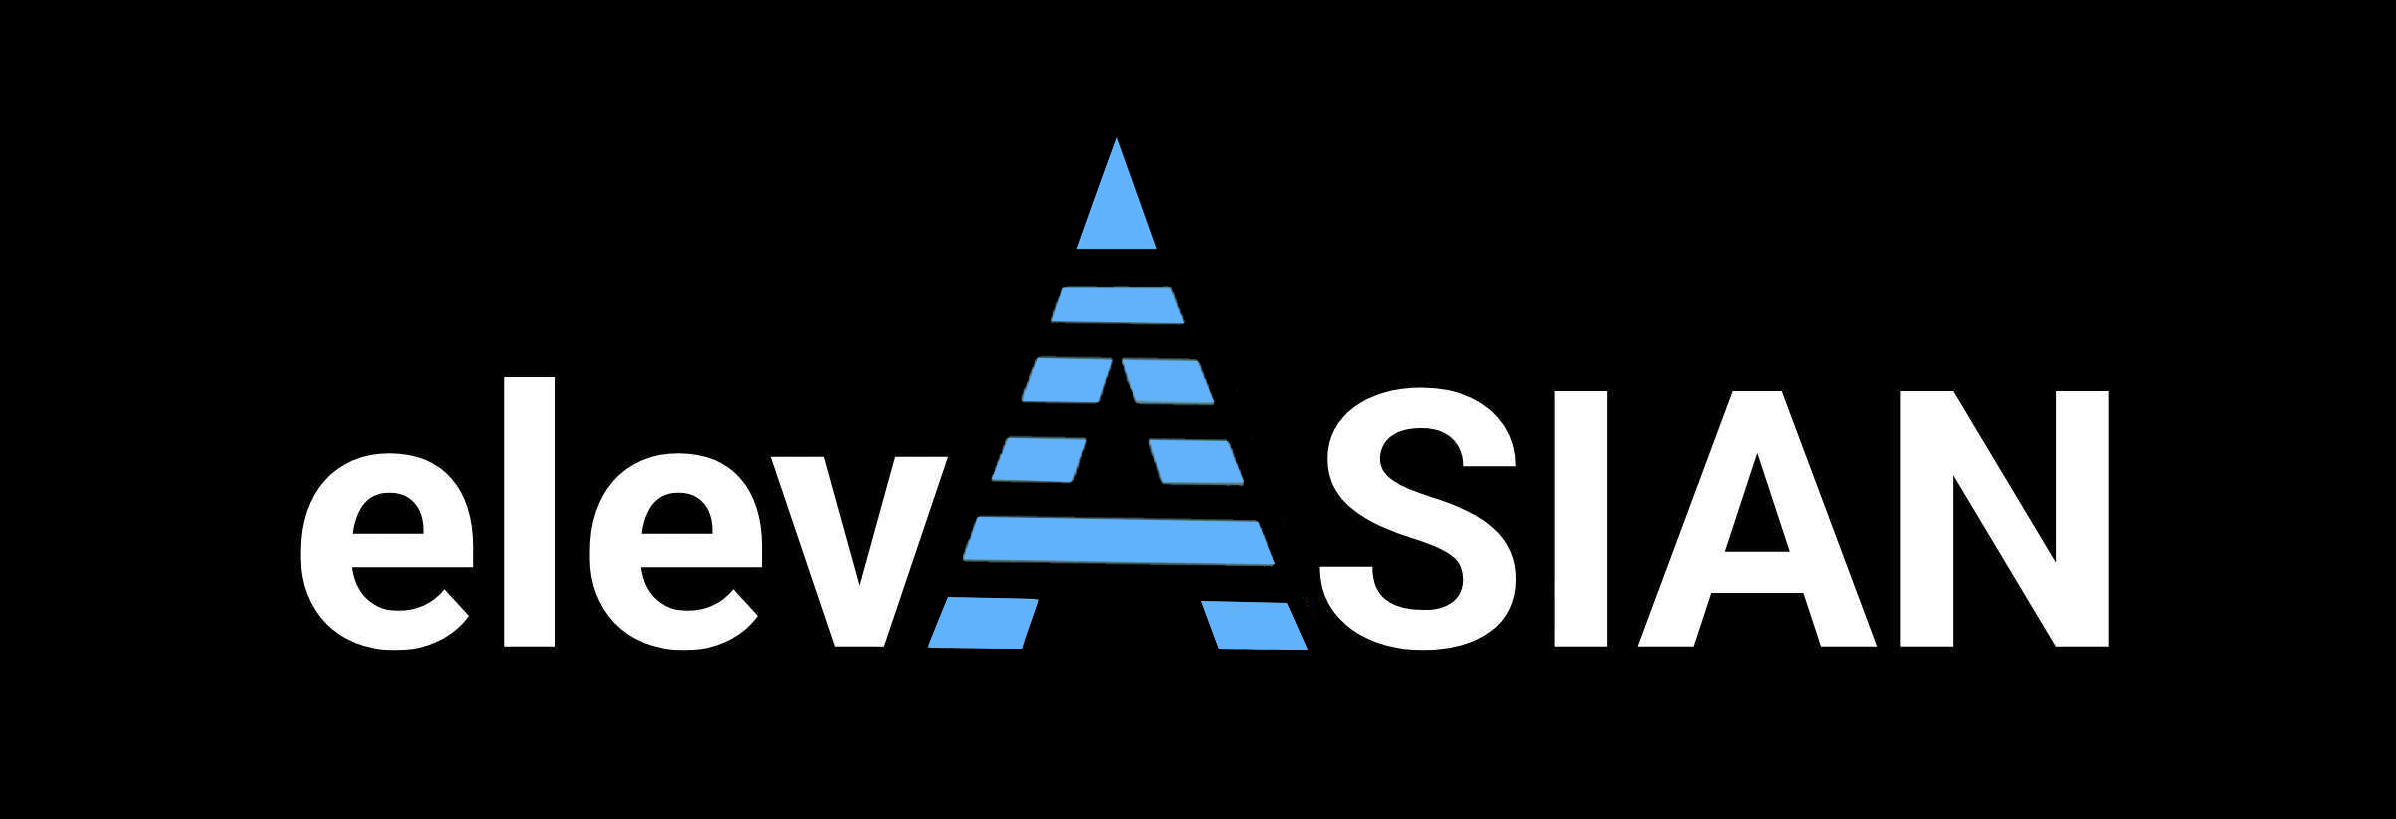 elevAsian logo